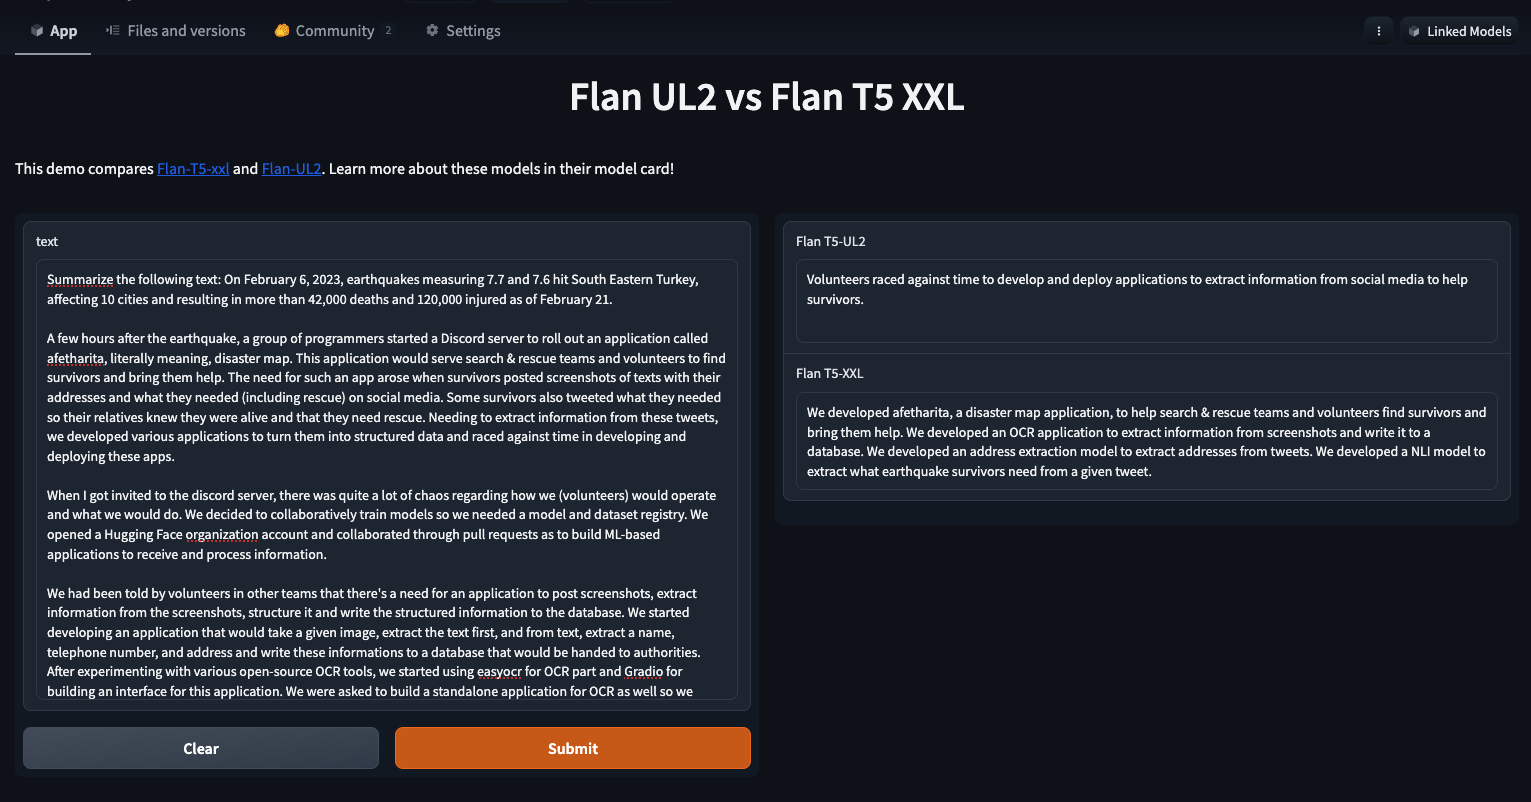 Applications of FLAN-UL2